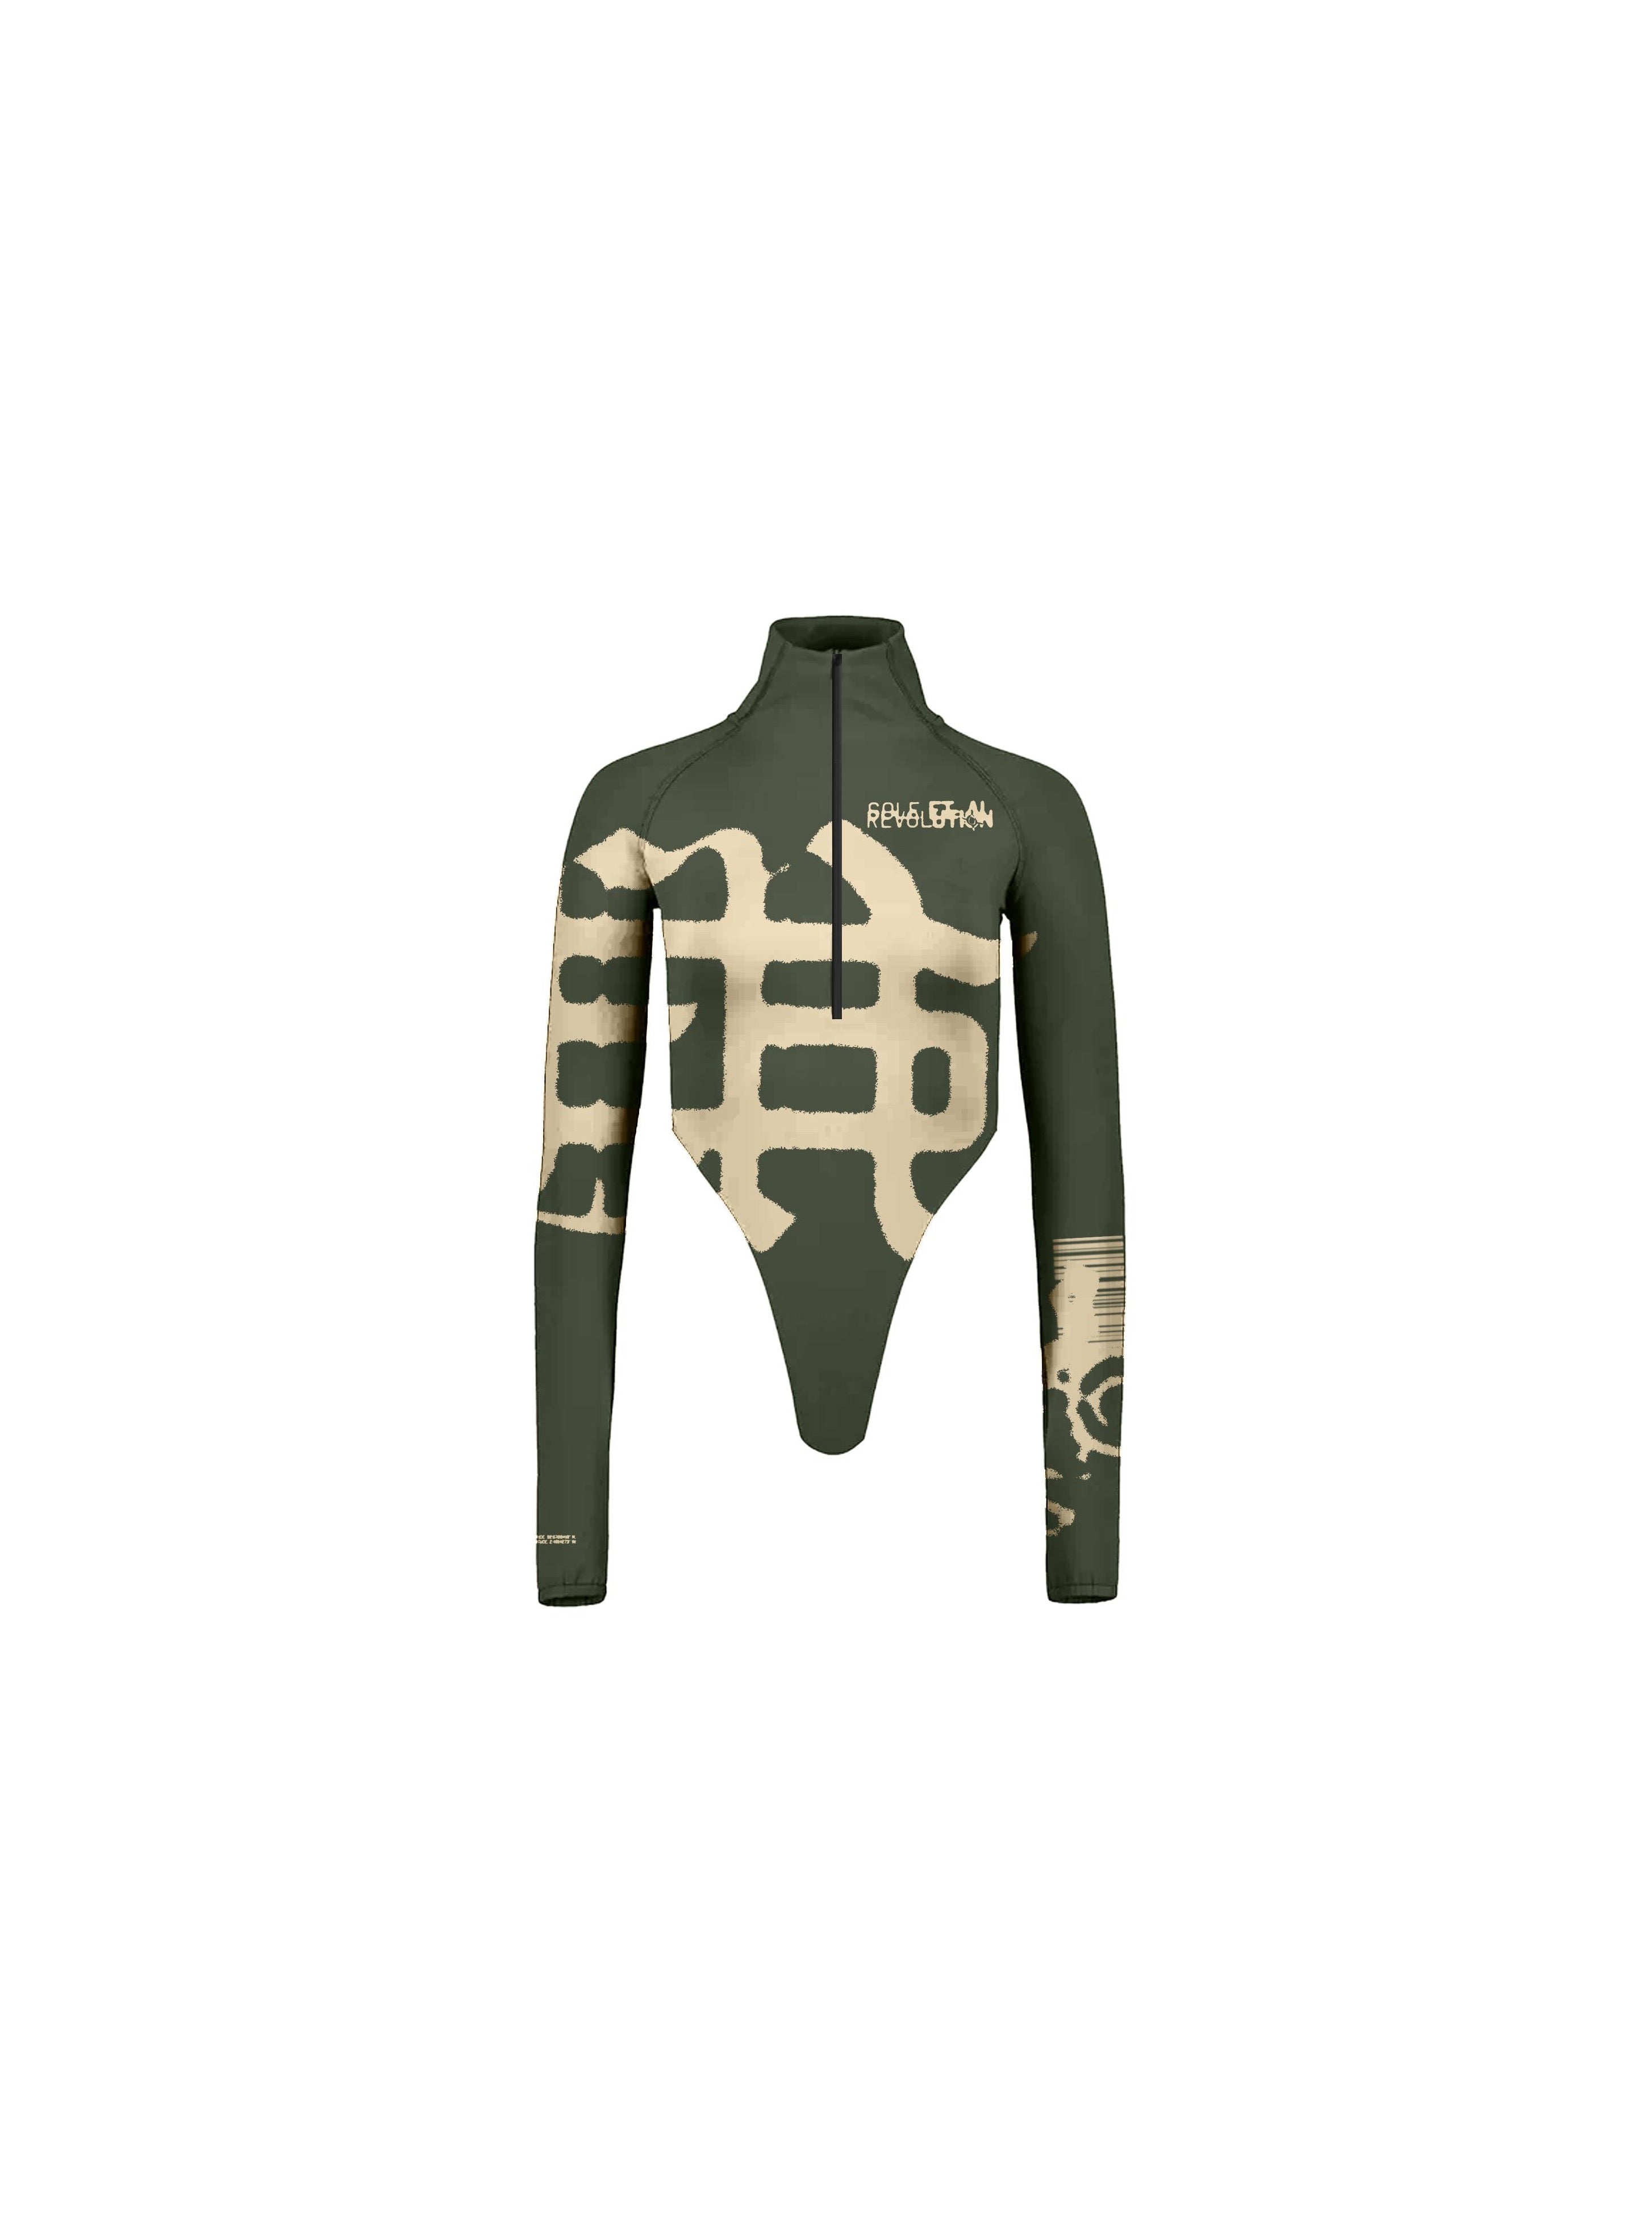 Sole et. Al Revølutiøn Zip Bodysuit : Military Green / Sand